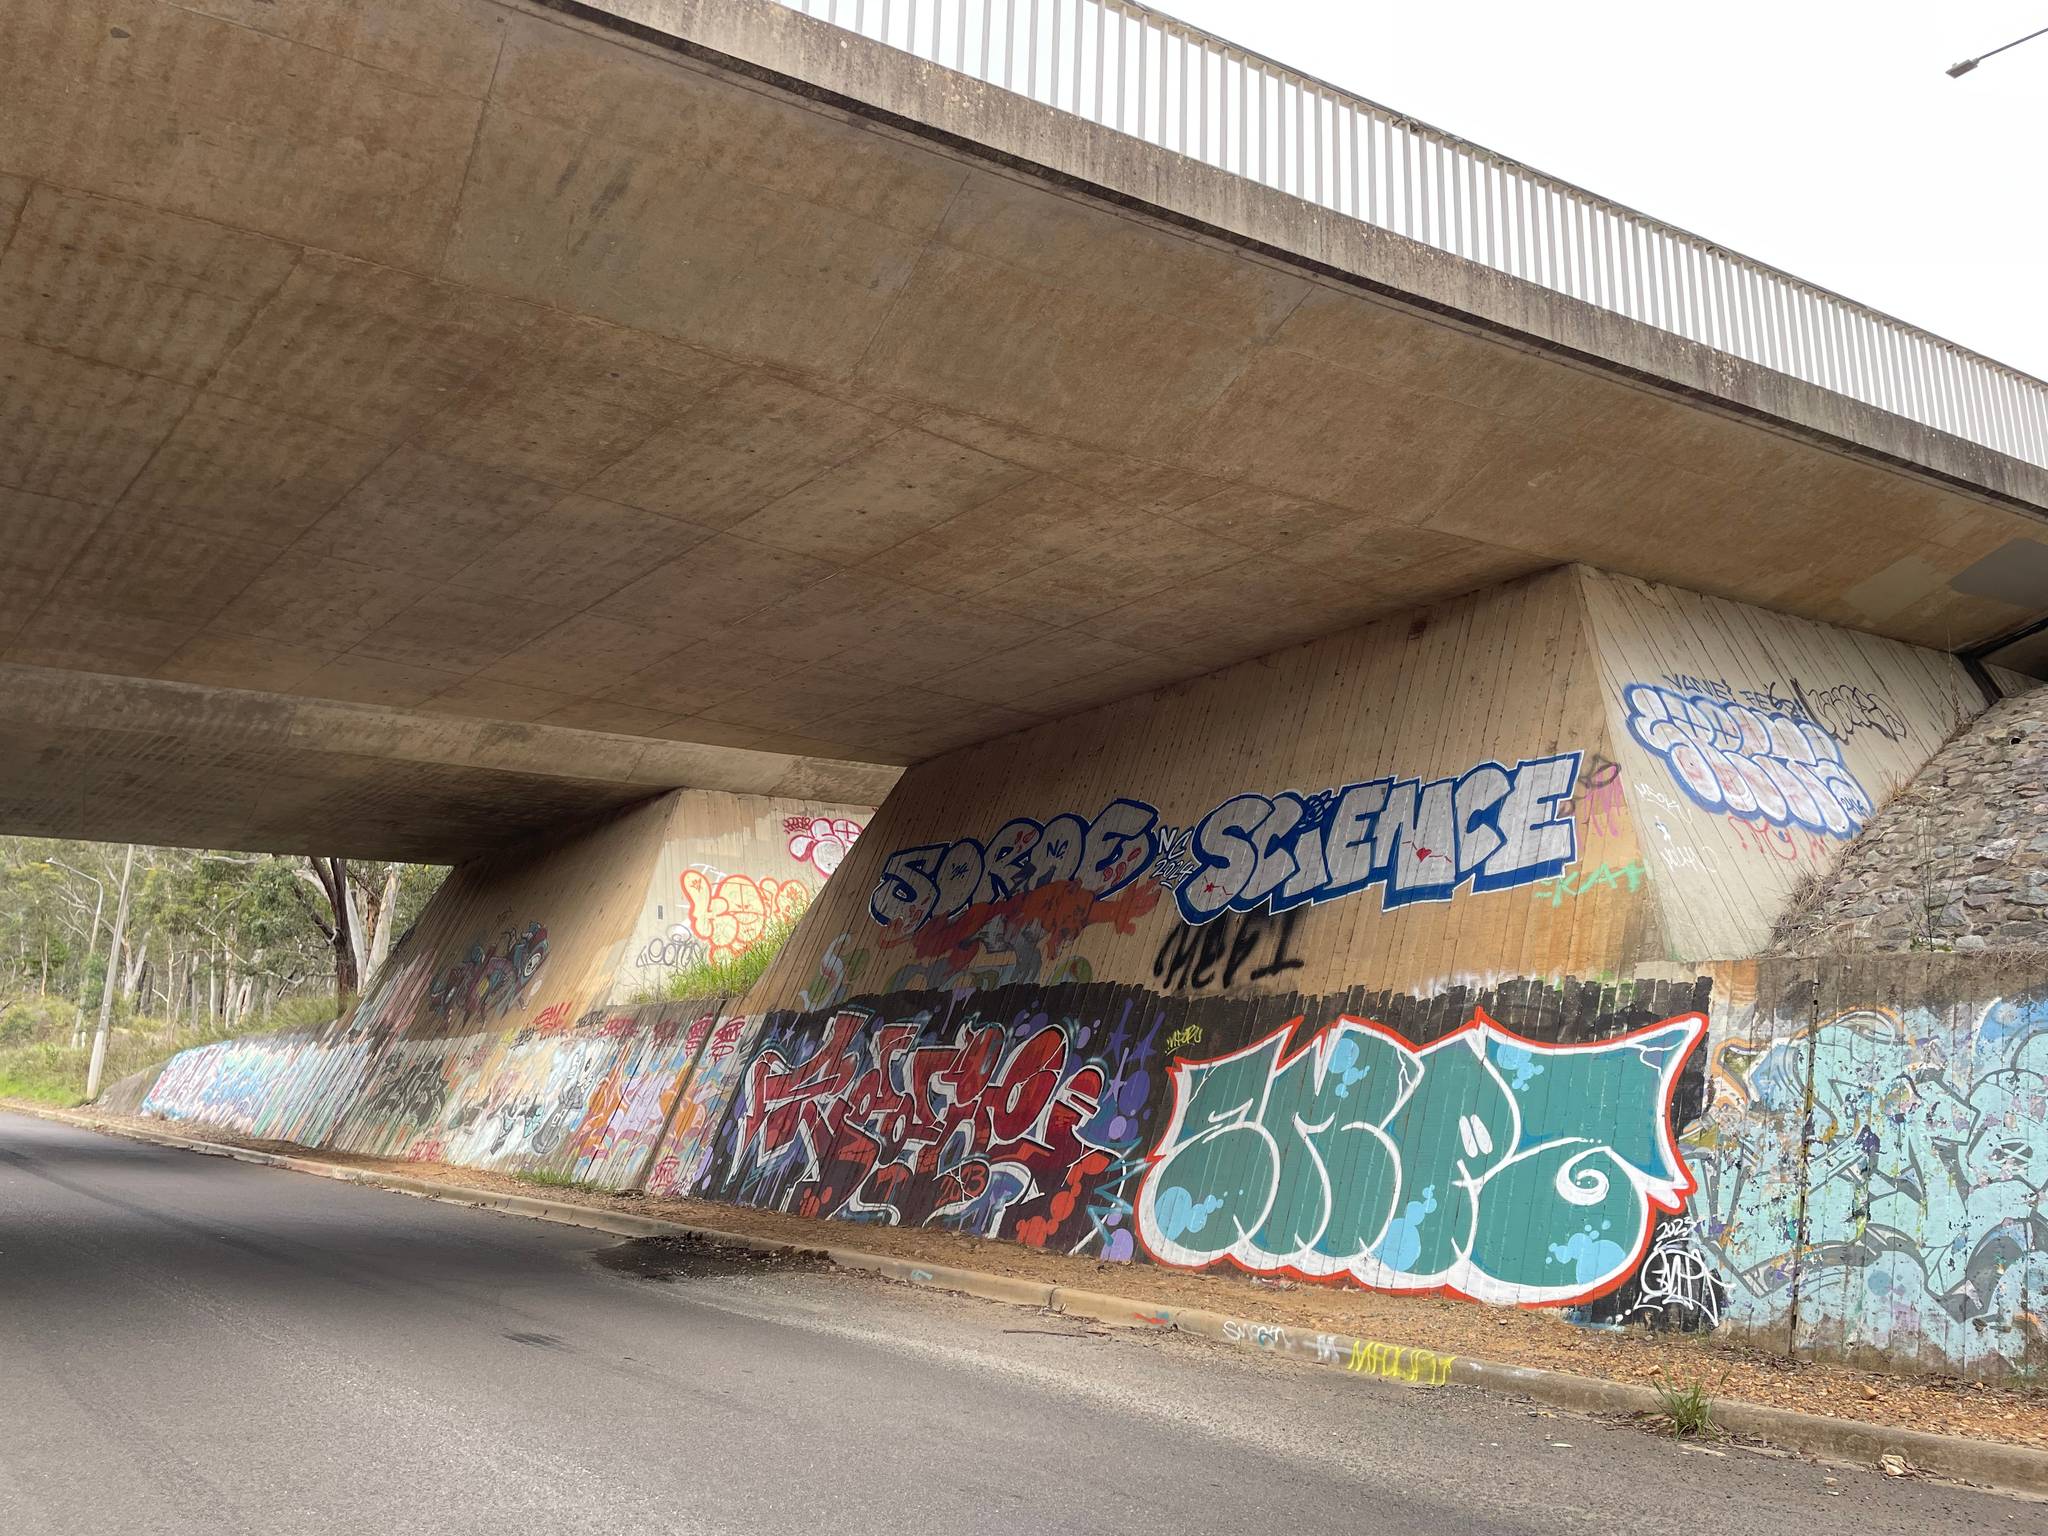 &mdash;Frith Rd Underpass ex-Legal Walls